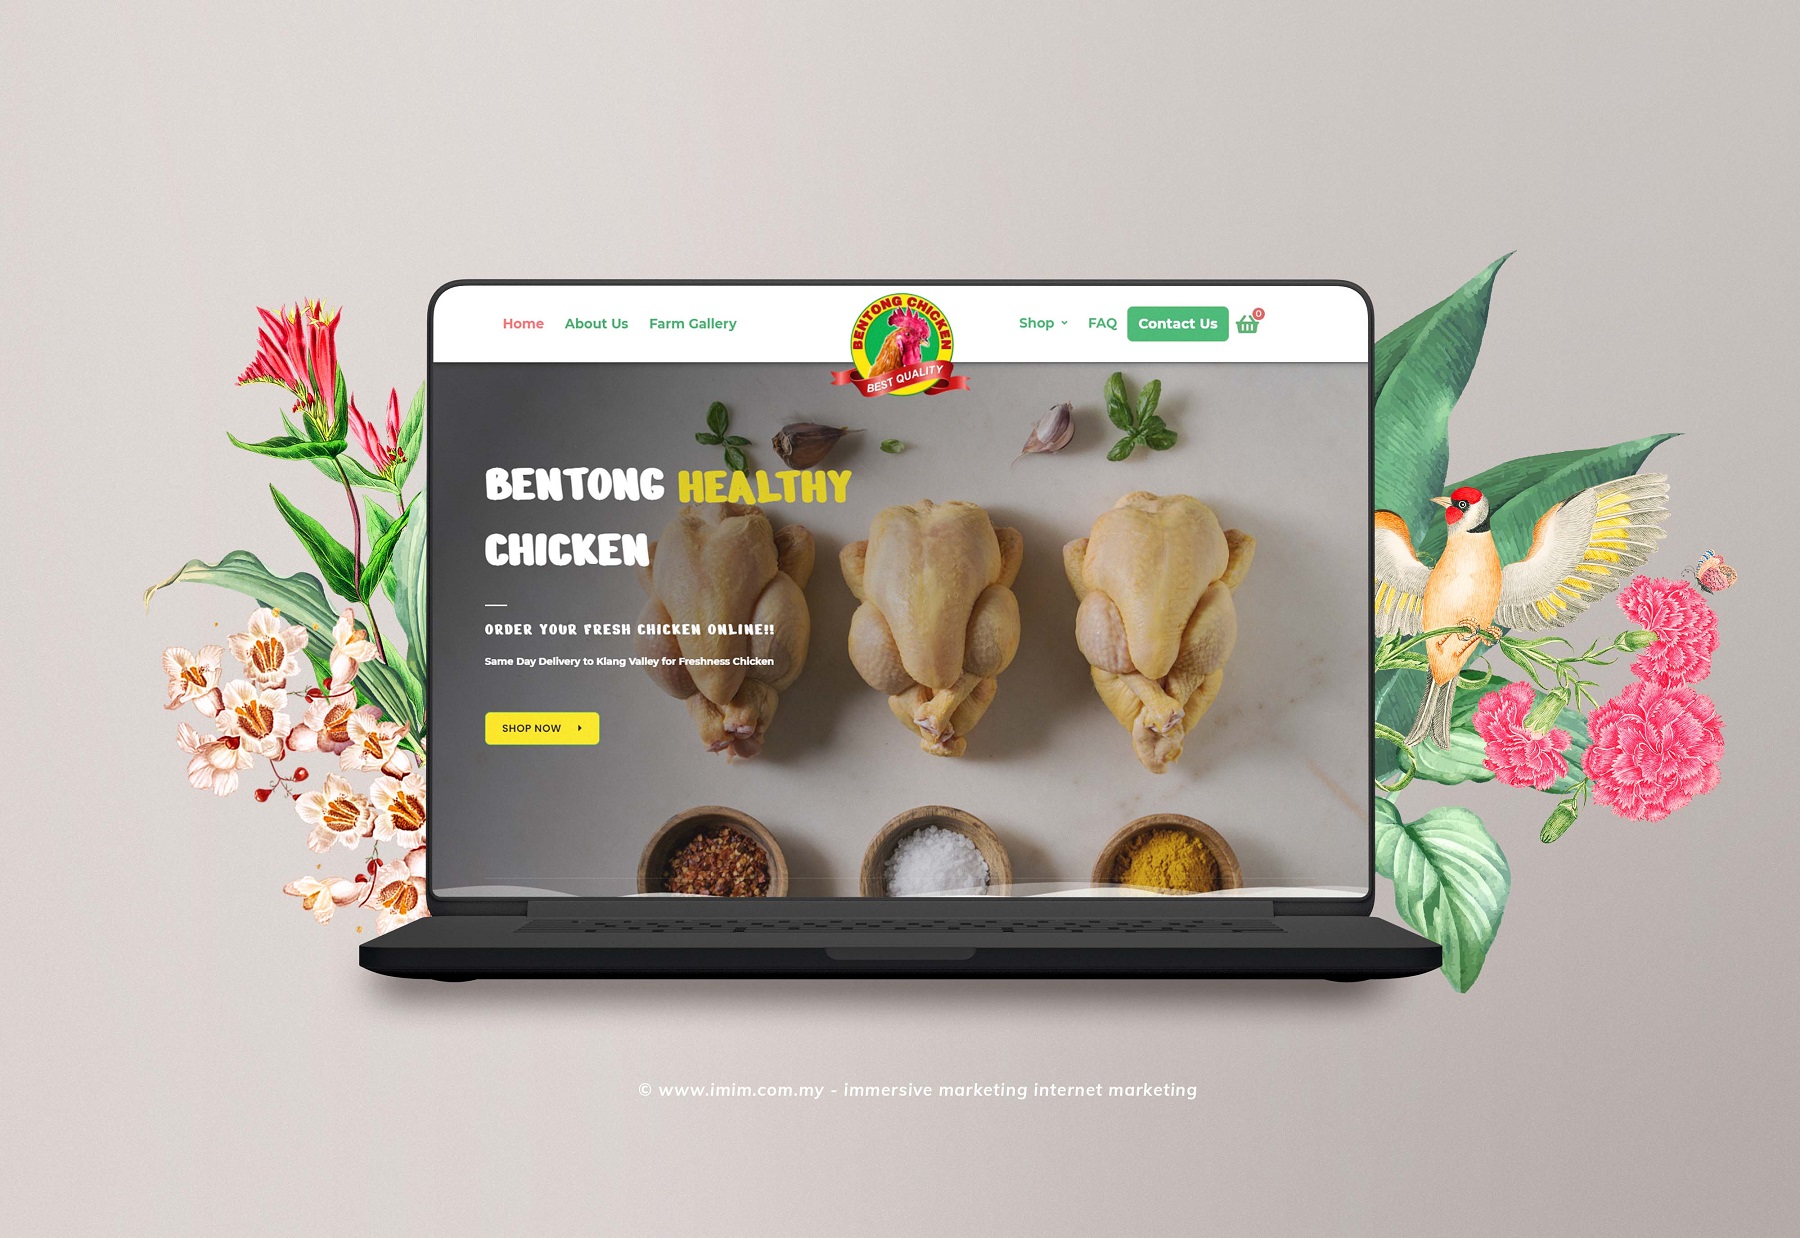 Bentong Chicken Web Design Portfolio a mockup screen from website designer in Pj Malaysia by IMIM